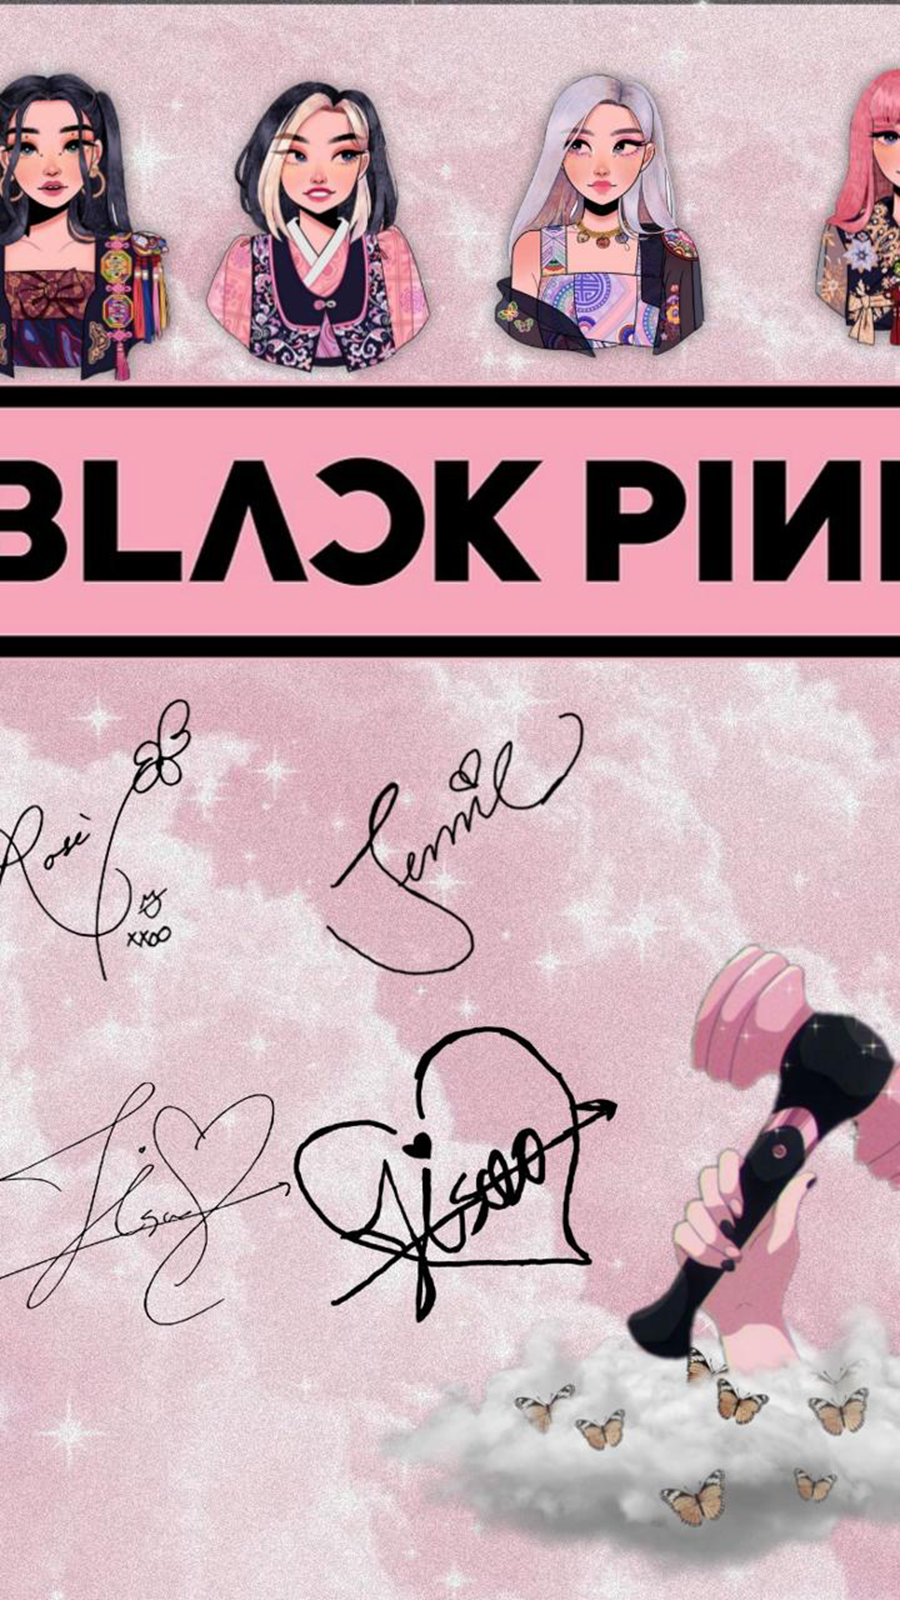 BLACKPINK WALLPAPER  Lisa blackpink wallpaper Blackpink Black pink